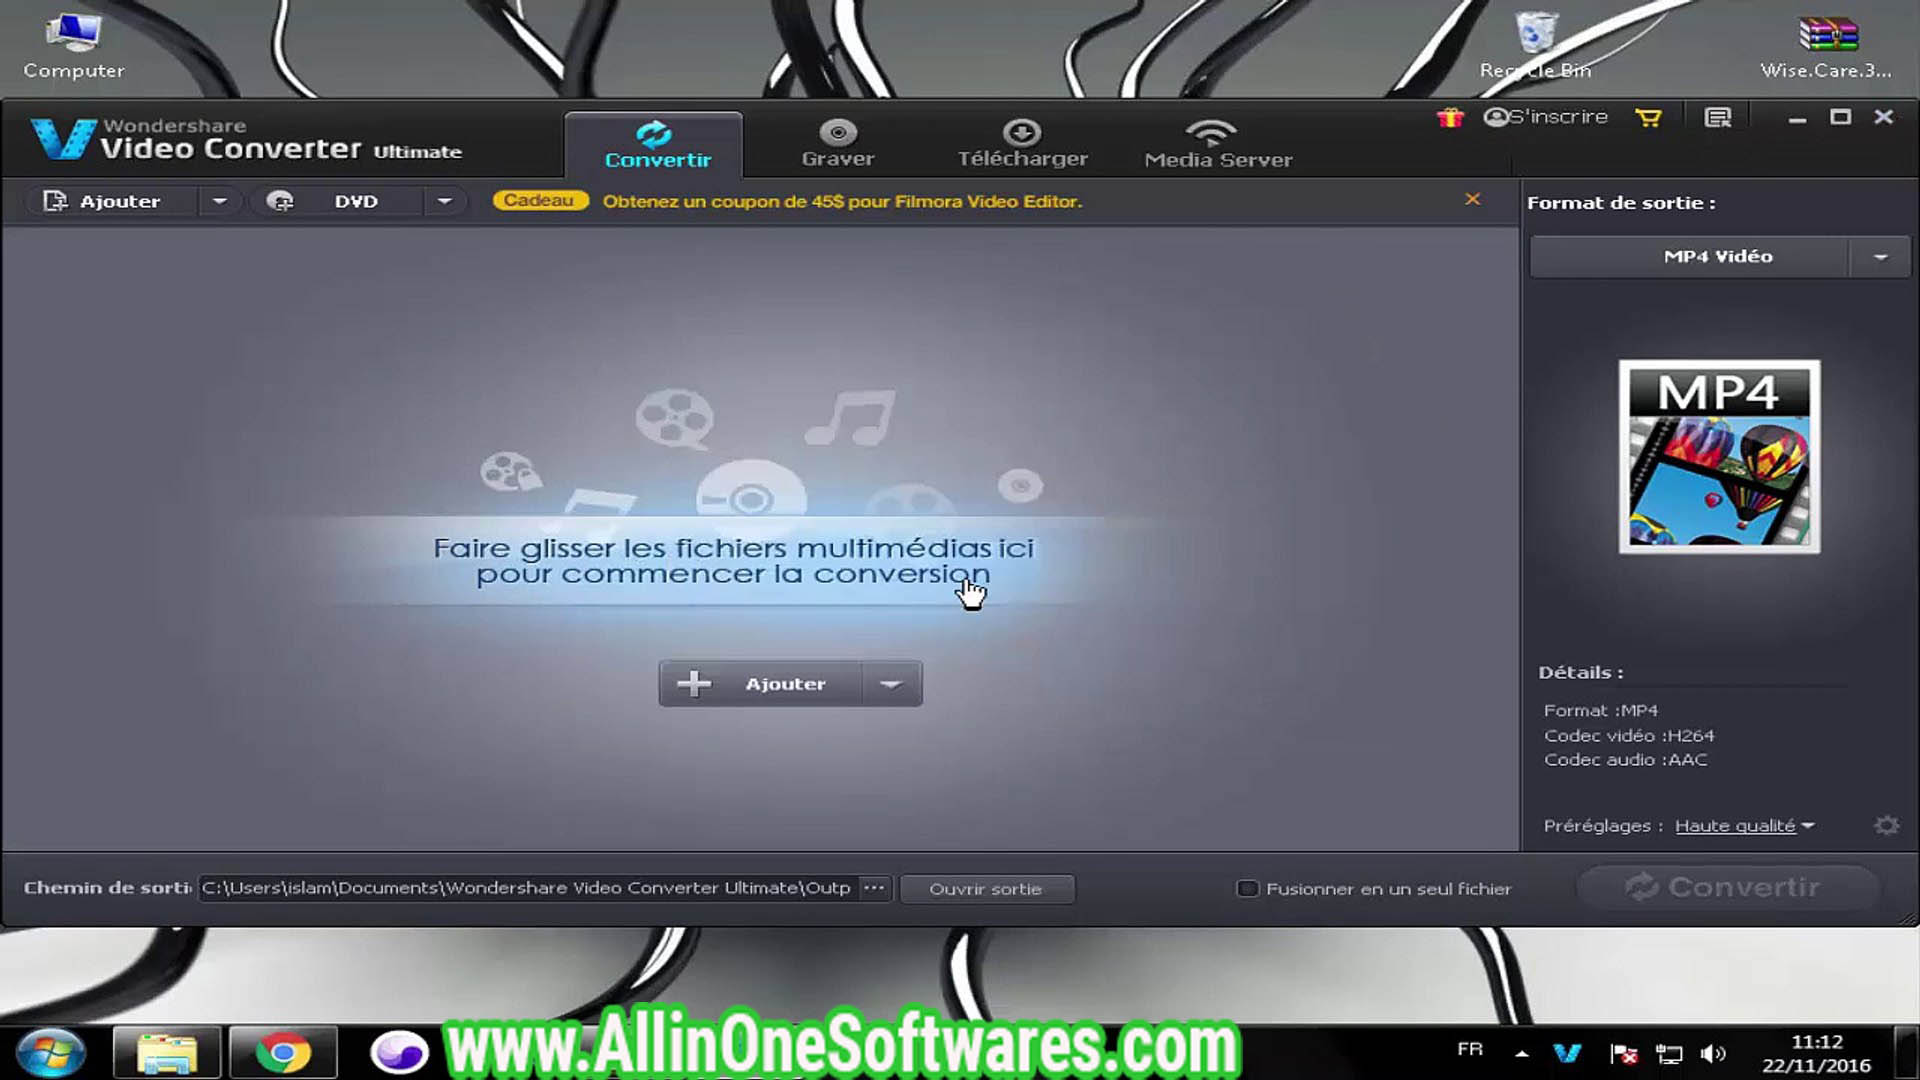 Wondershare Video Converter Ultimate 9.0.0 Free Download